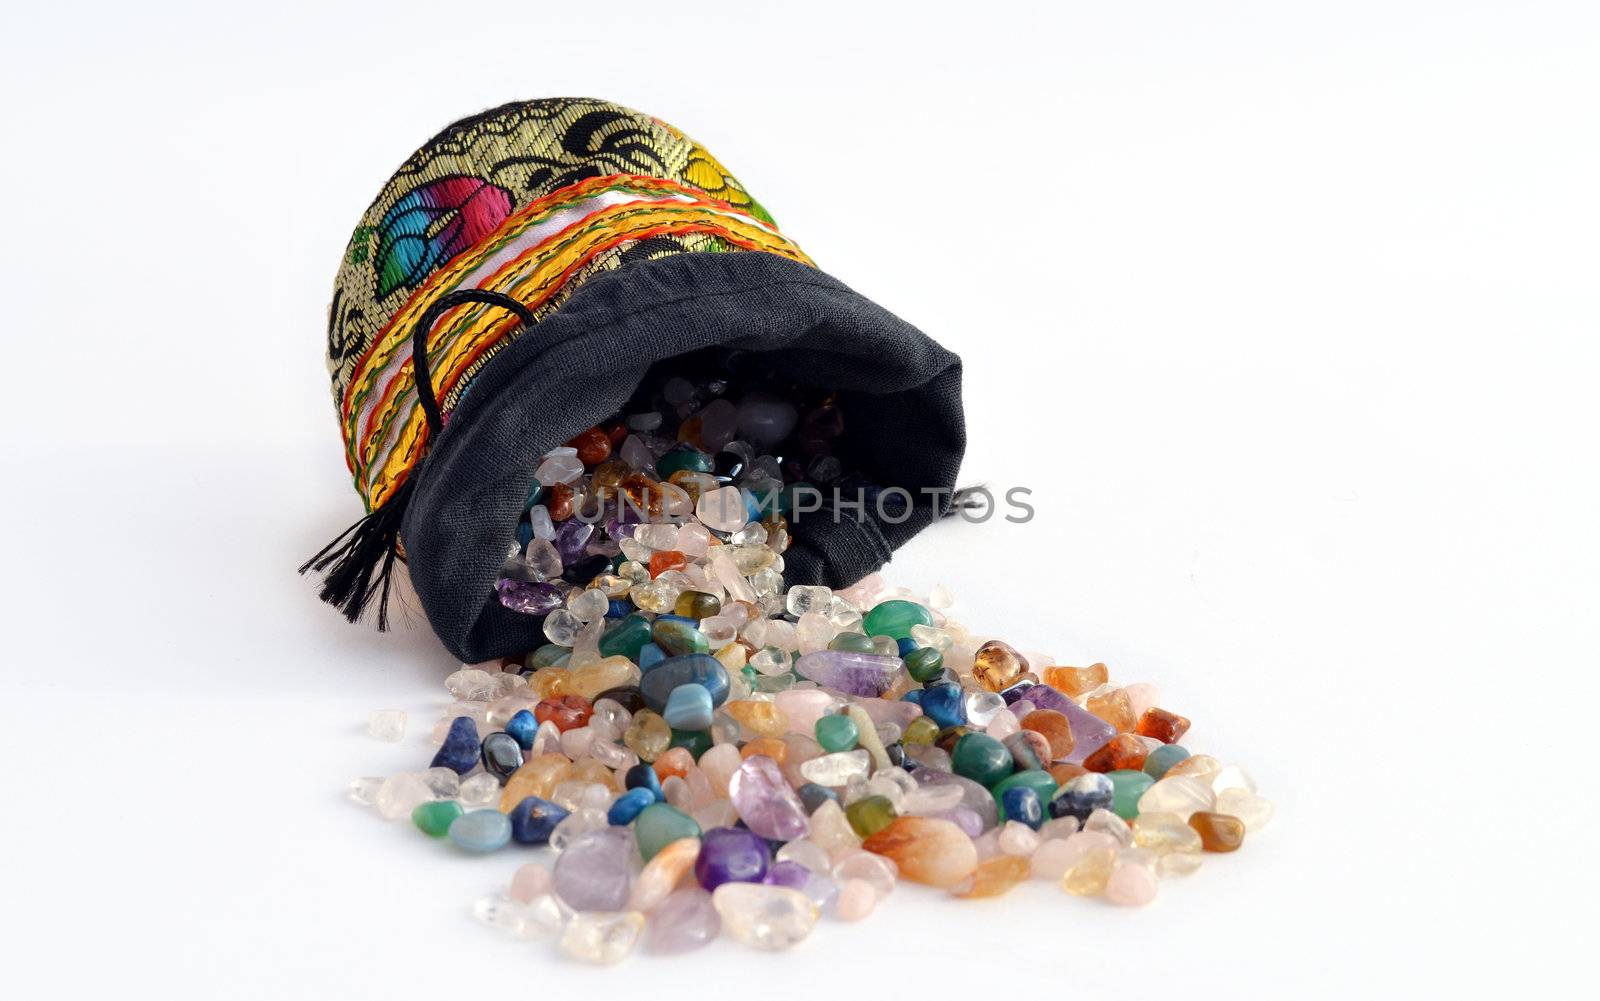 Semiprecious gems out of a sacket by artofphoto